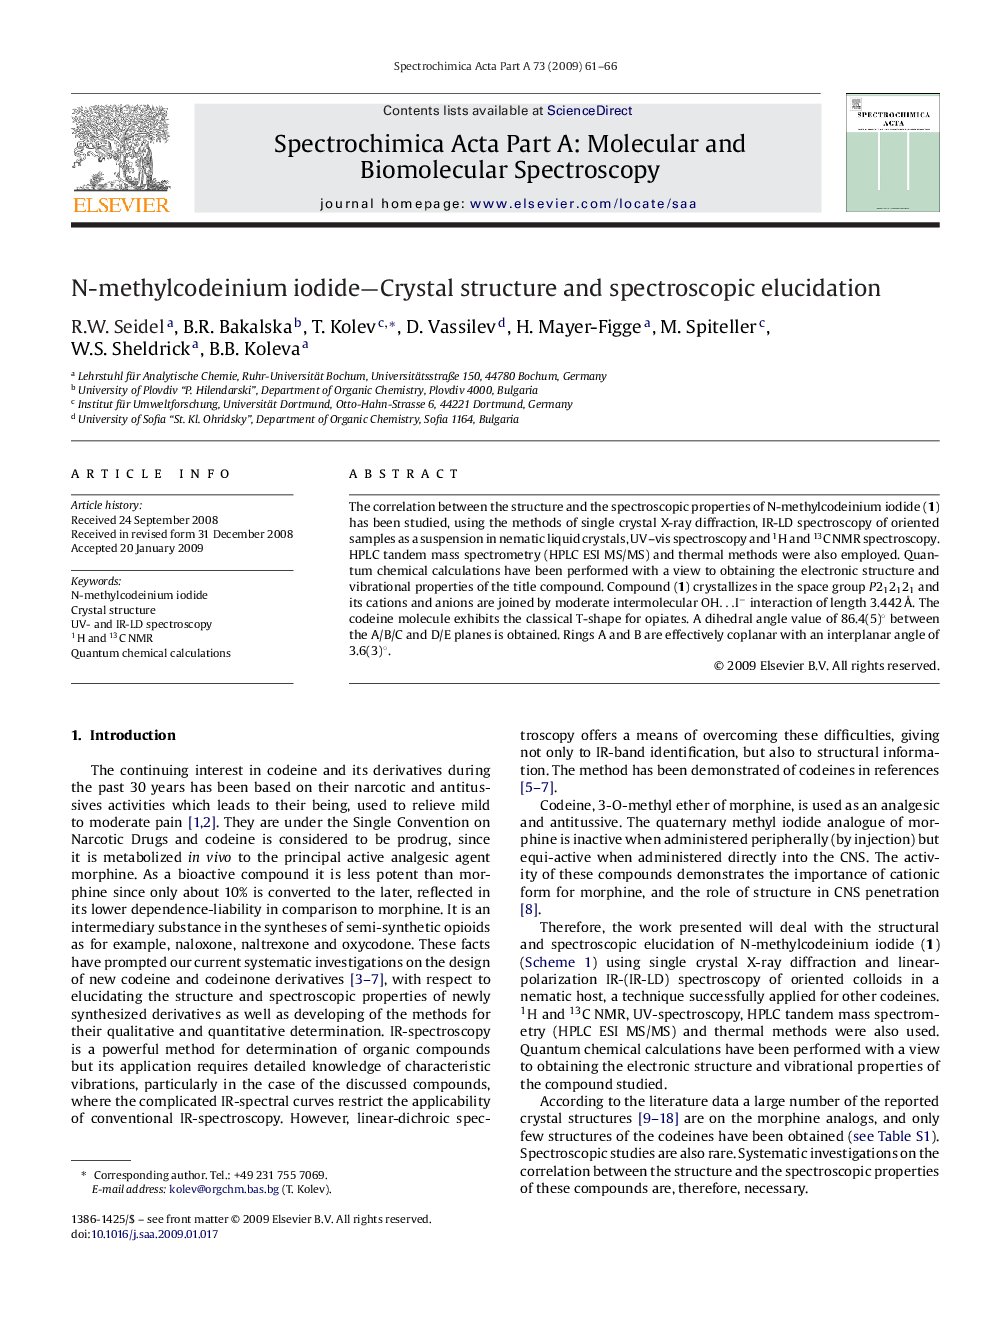 N-methylcodeinium iodide—Crystal structure and spectroscopic elucidation